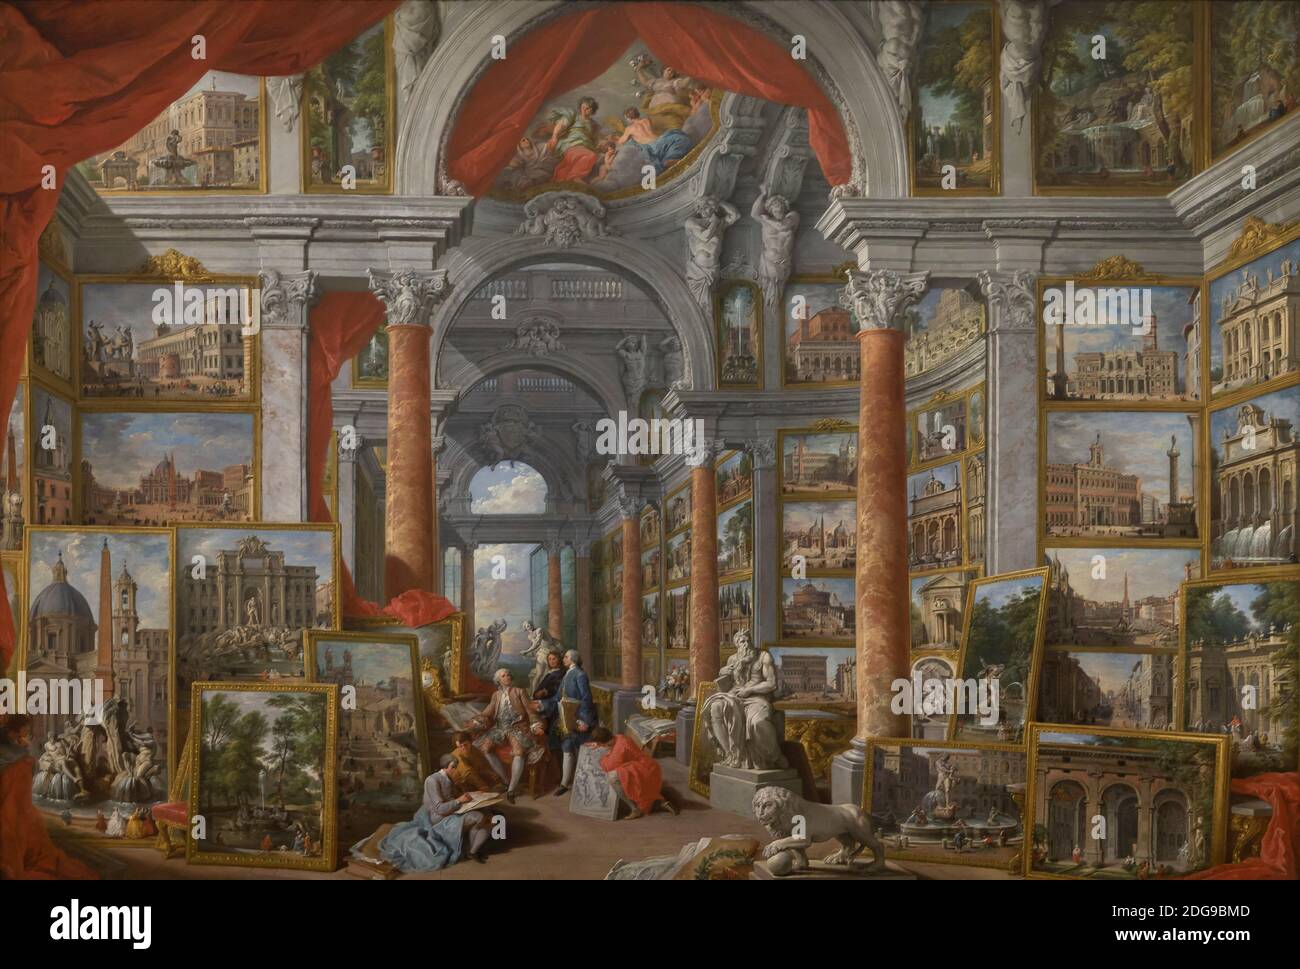 Galería de imágenes con vistas a la Roma moderna, Roma moderna, Giovanni Paolo Panini, 1757, Foto de stock